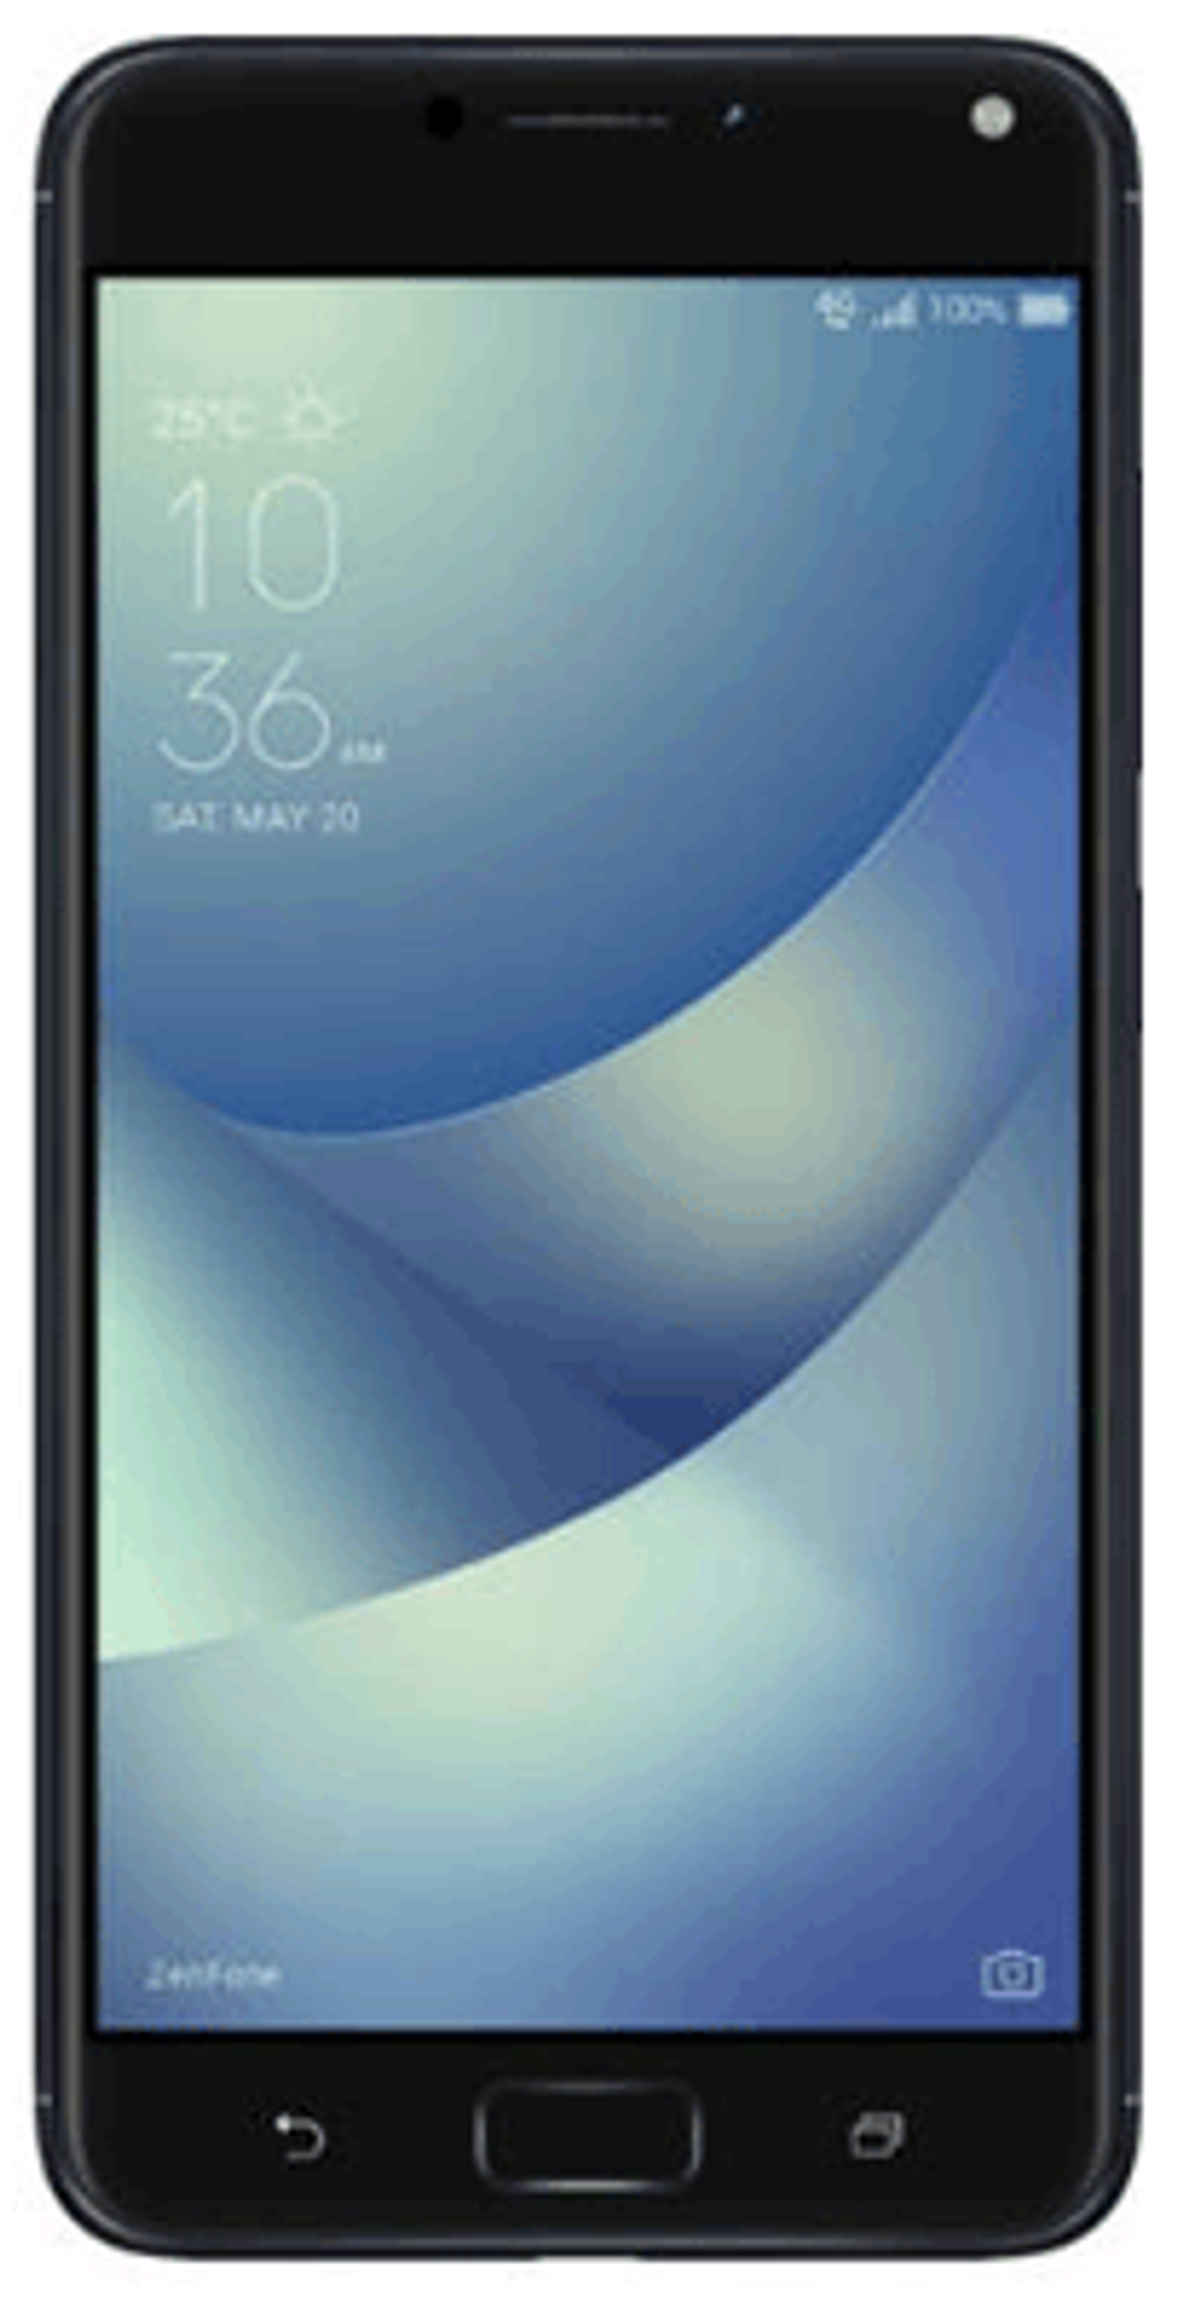 Asus Zenfone 4 Max Pro Expected Specs, Release Date in India | Digit